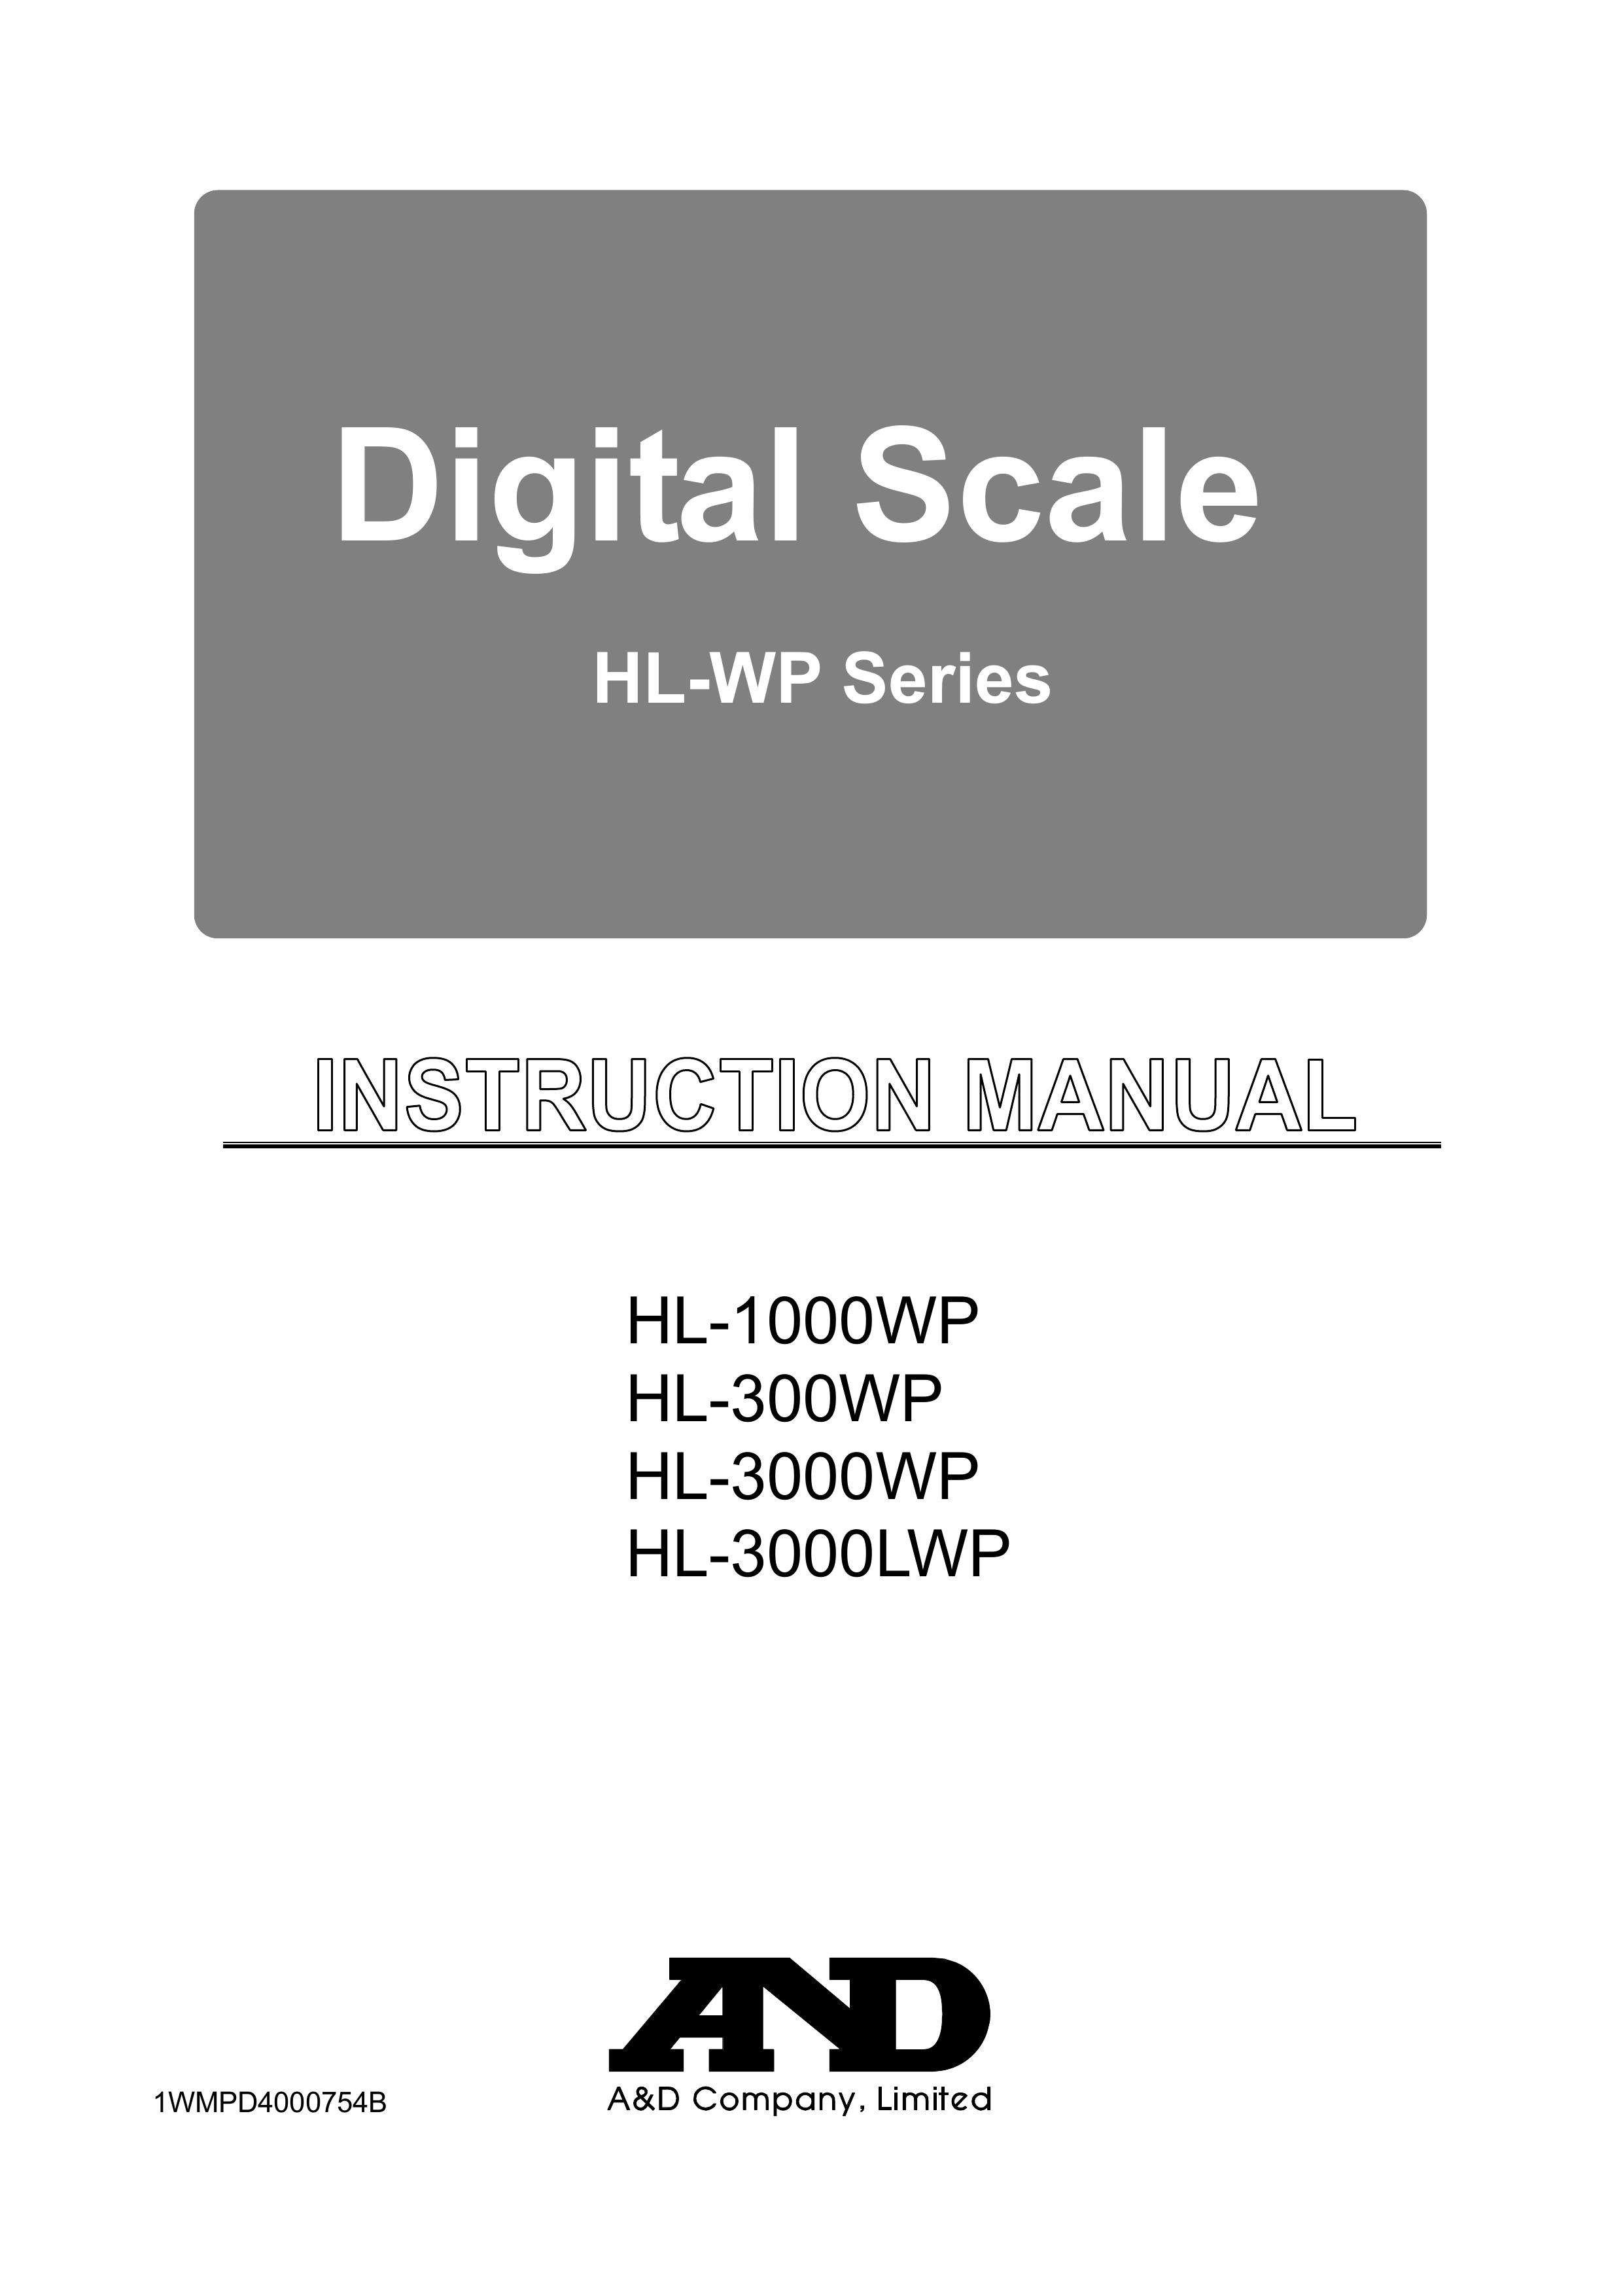 A&D HL-3000LWP Scale User Manual